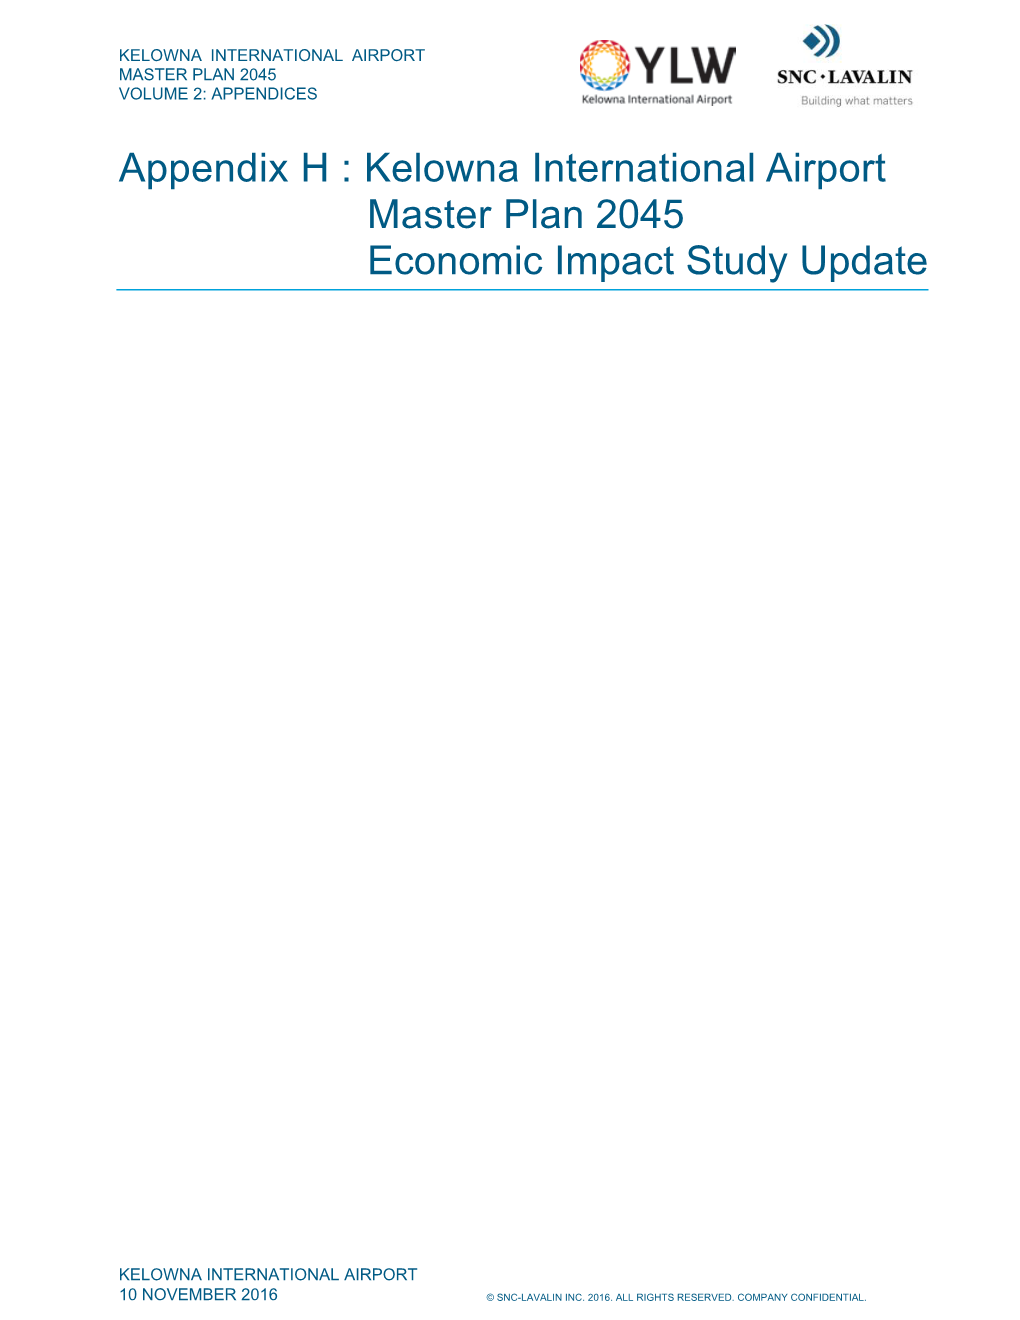 Appendix H : Kelowna International Airport Master Plan 2045 Economic Impact Study Update